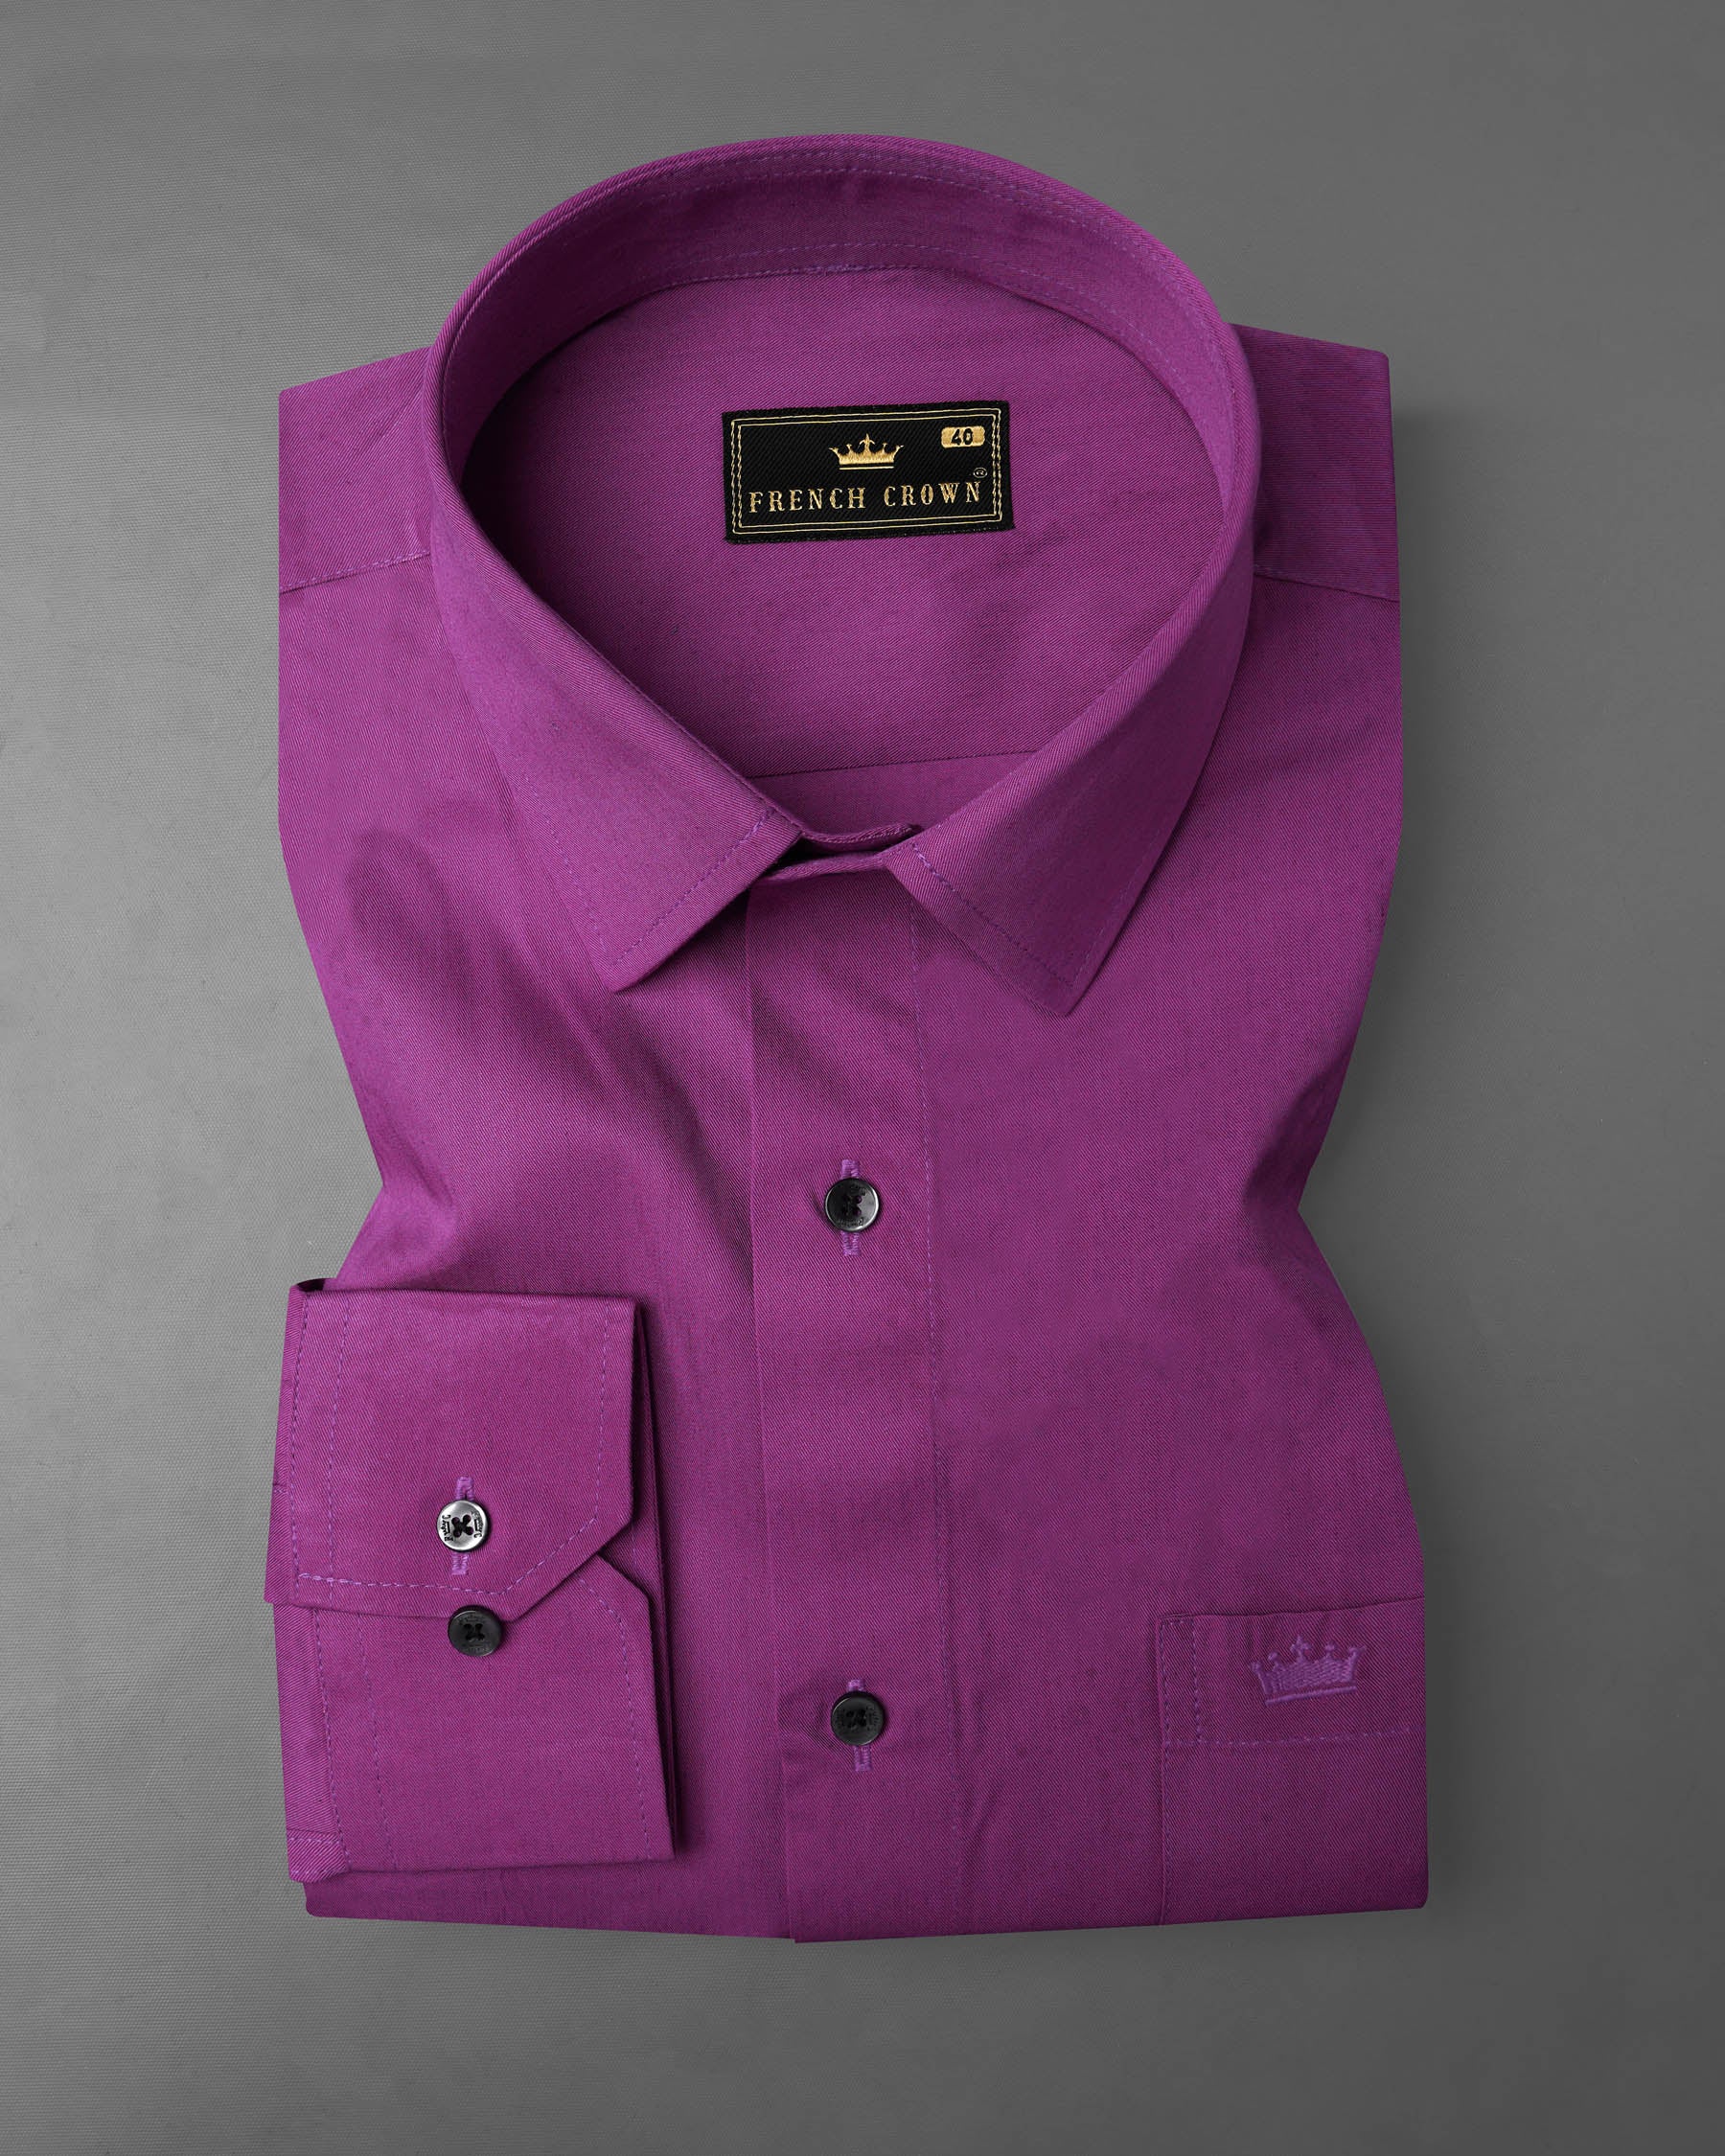 Byzantium Purple Premium Cotton shirt 7970-BLK-38, 7970-BLK-H-38, 7970-BLK-39, 7970-BLK-H-39, 7970-BLK-40, 7970-BLK-H-40, 7970-BLK-42, 7970-BLK-H-42, 7970-BLK-44, 7970-BLK-H-44, 7970-BLK-46, 7970-BLK-H-46, 7970-BLK-48, 7970-BLK-H-48, 7970-BLK-50, 7970-BLK-H-50, 7970-BLK-52, 7970-BLK-H-52